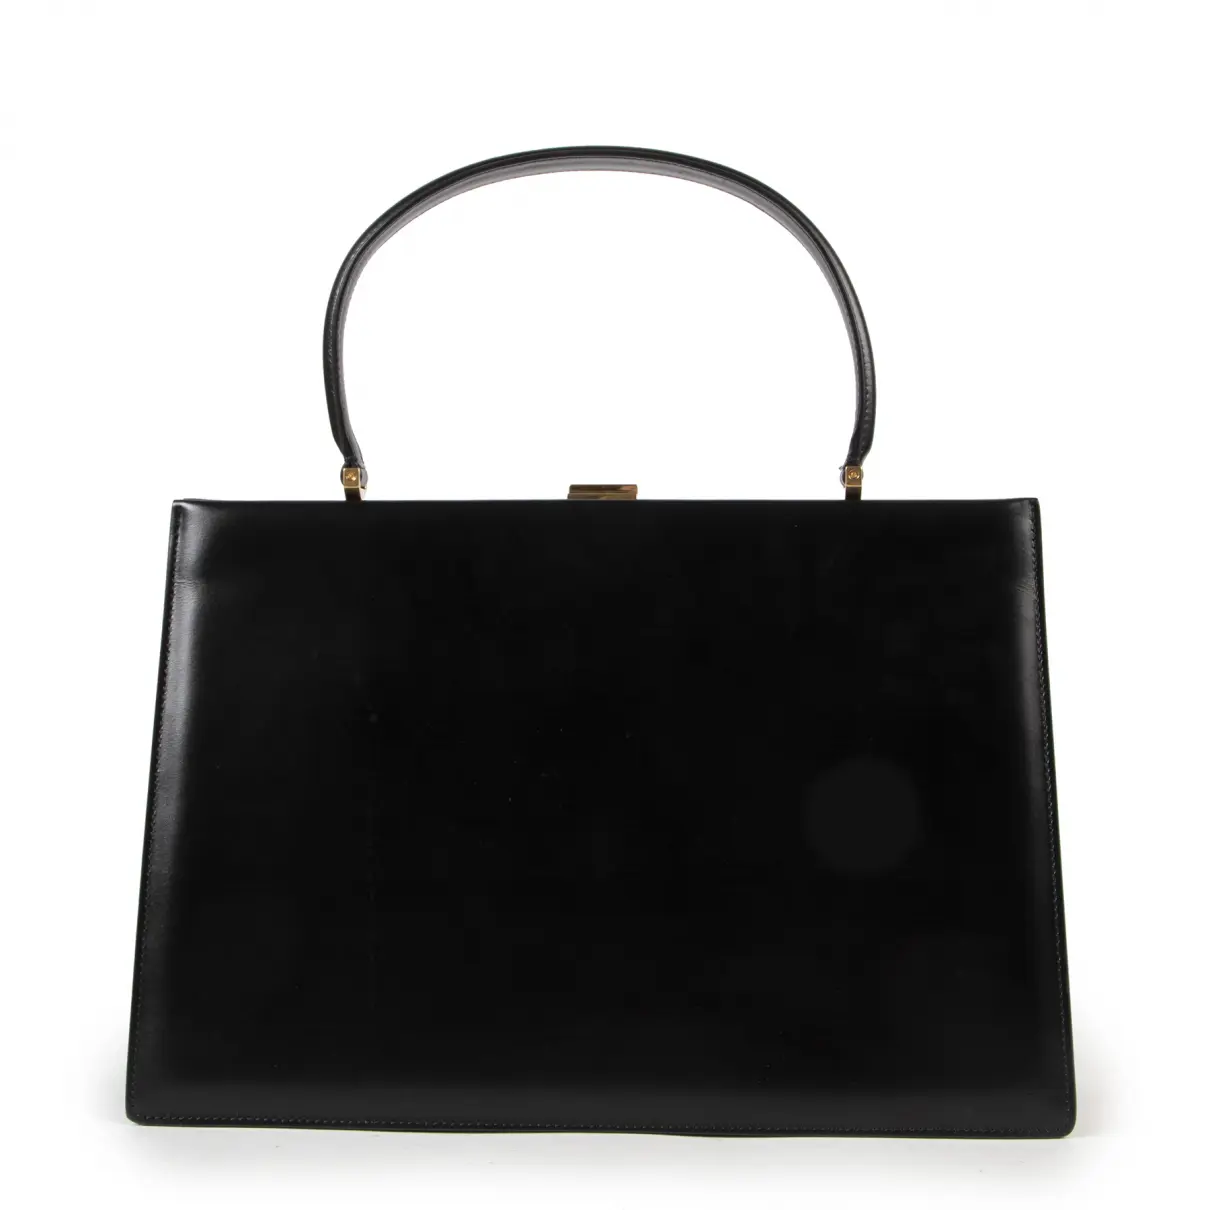 Buy Celine Clasp leather handbag online